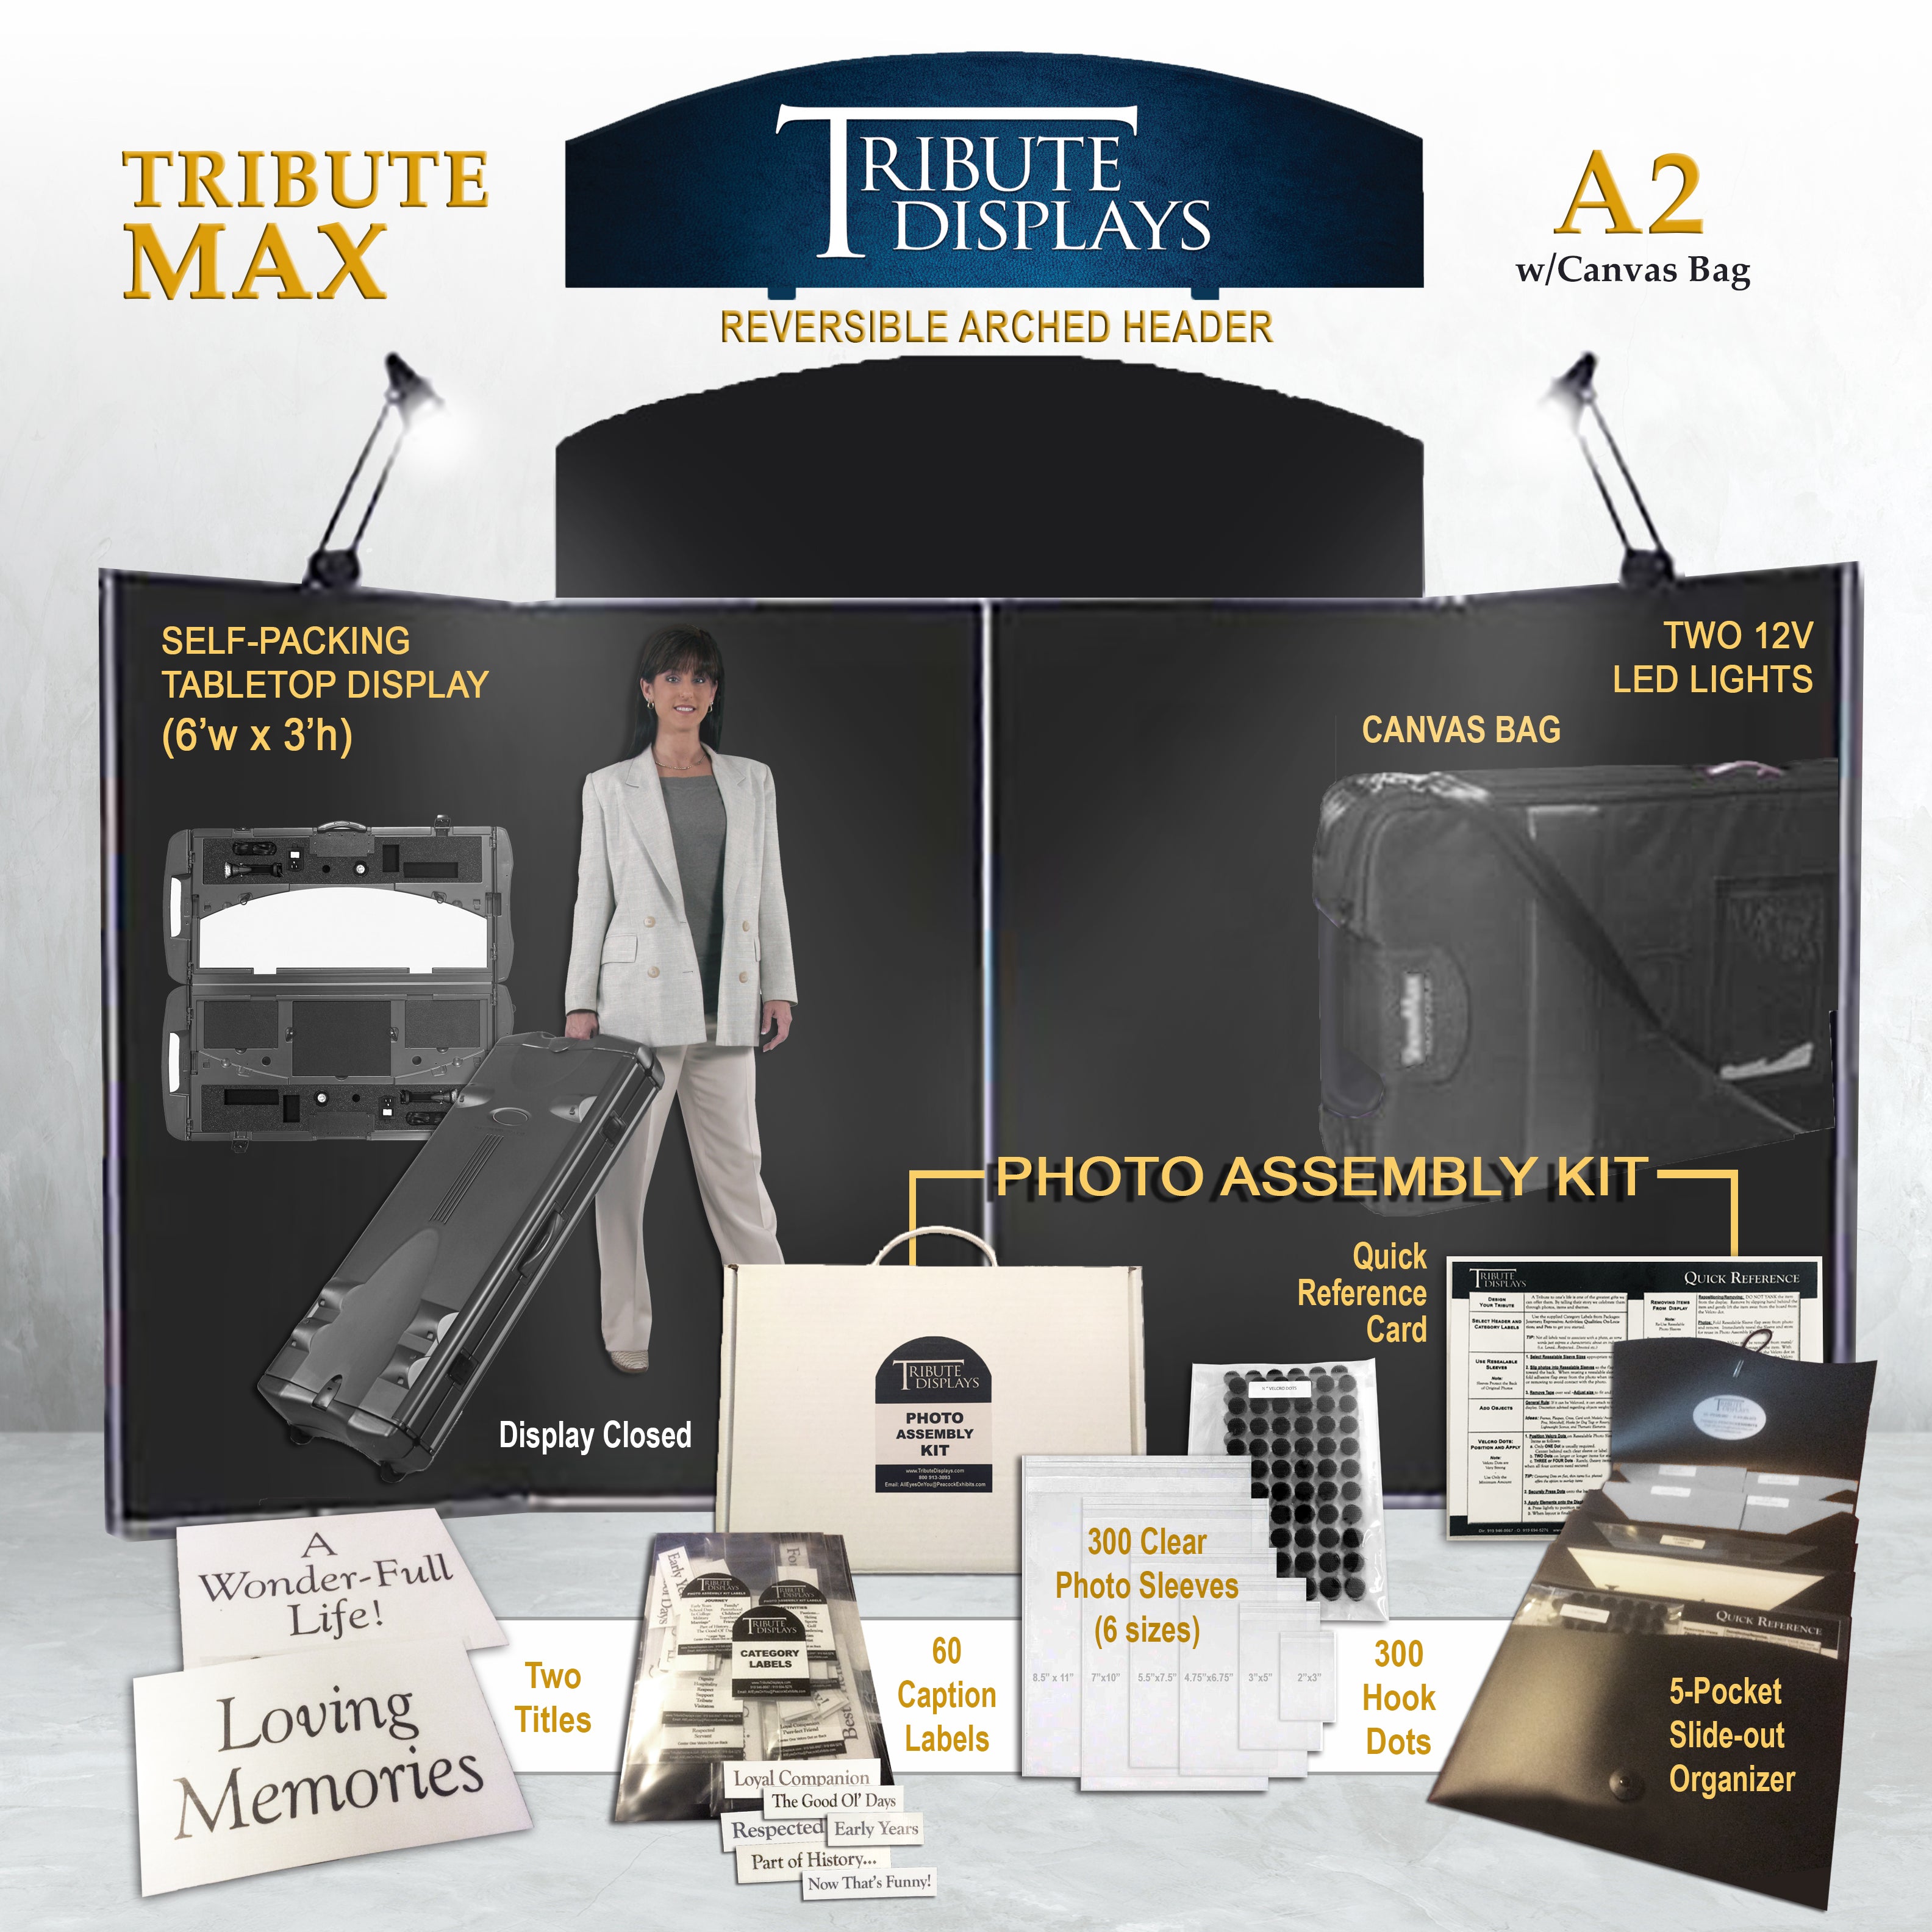 System Bundle "AC": Tribute Pair (Max + Briefcase)